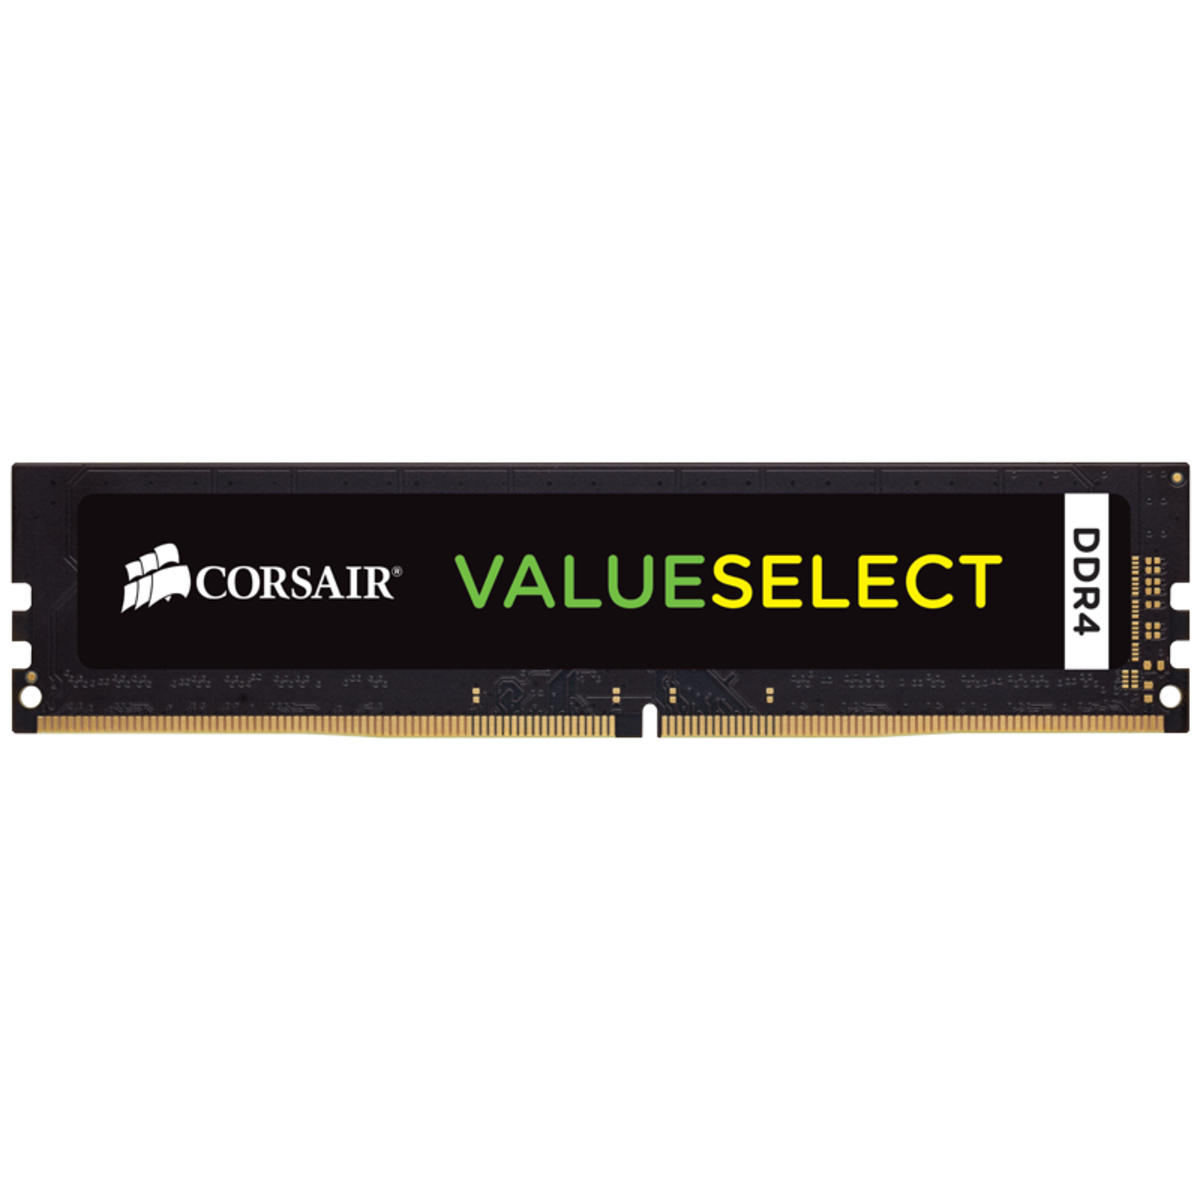 CORSAIR Arbeitsspeicher Value Select, DDR4, 32 GB